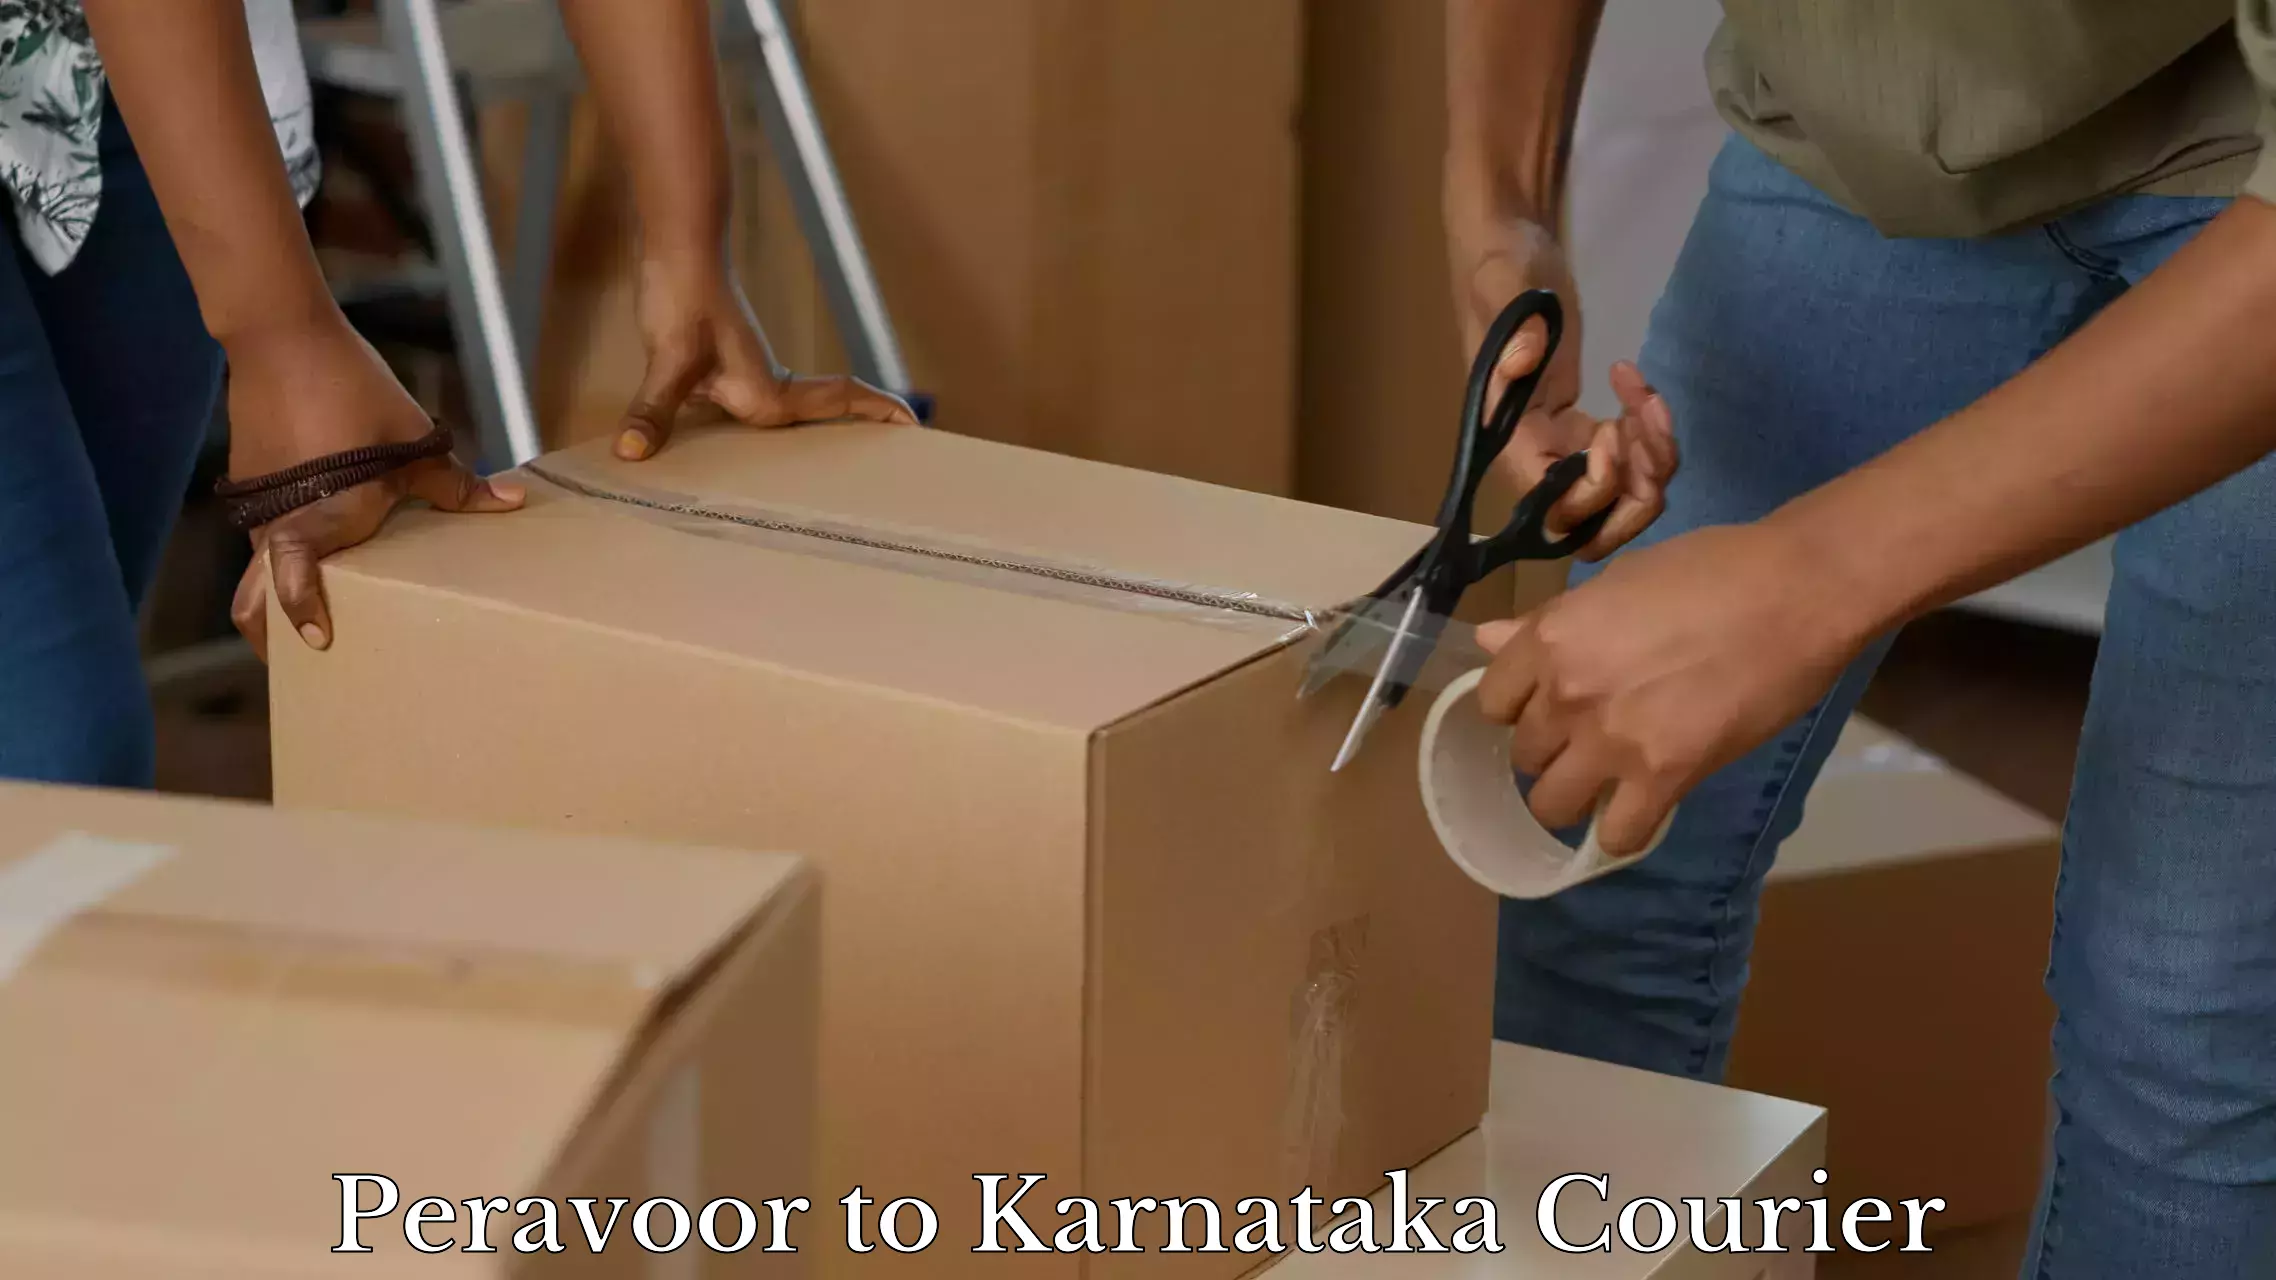 Luggage shipment specialists Peravoor to Karnataka